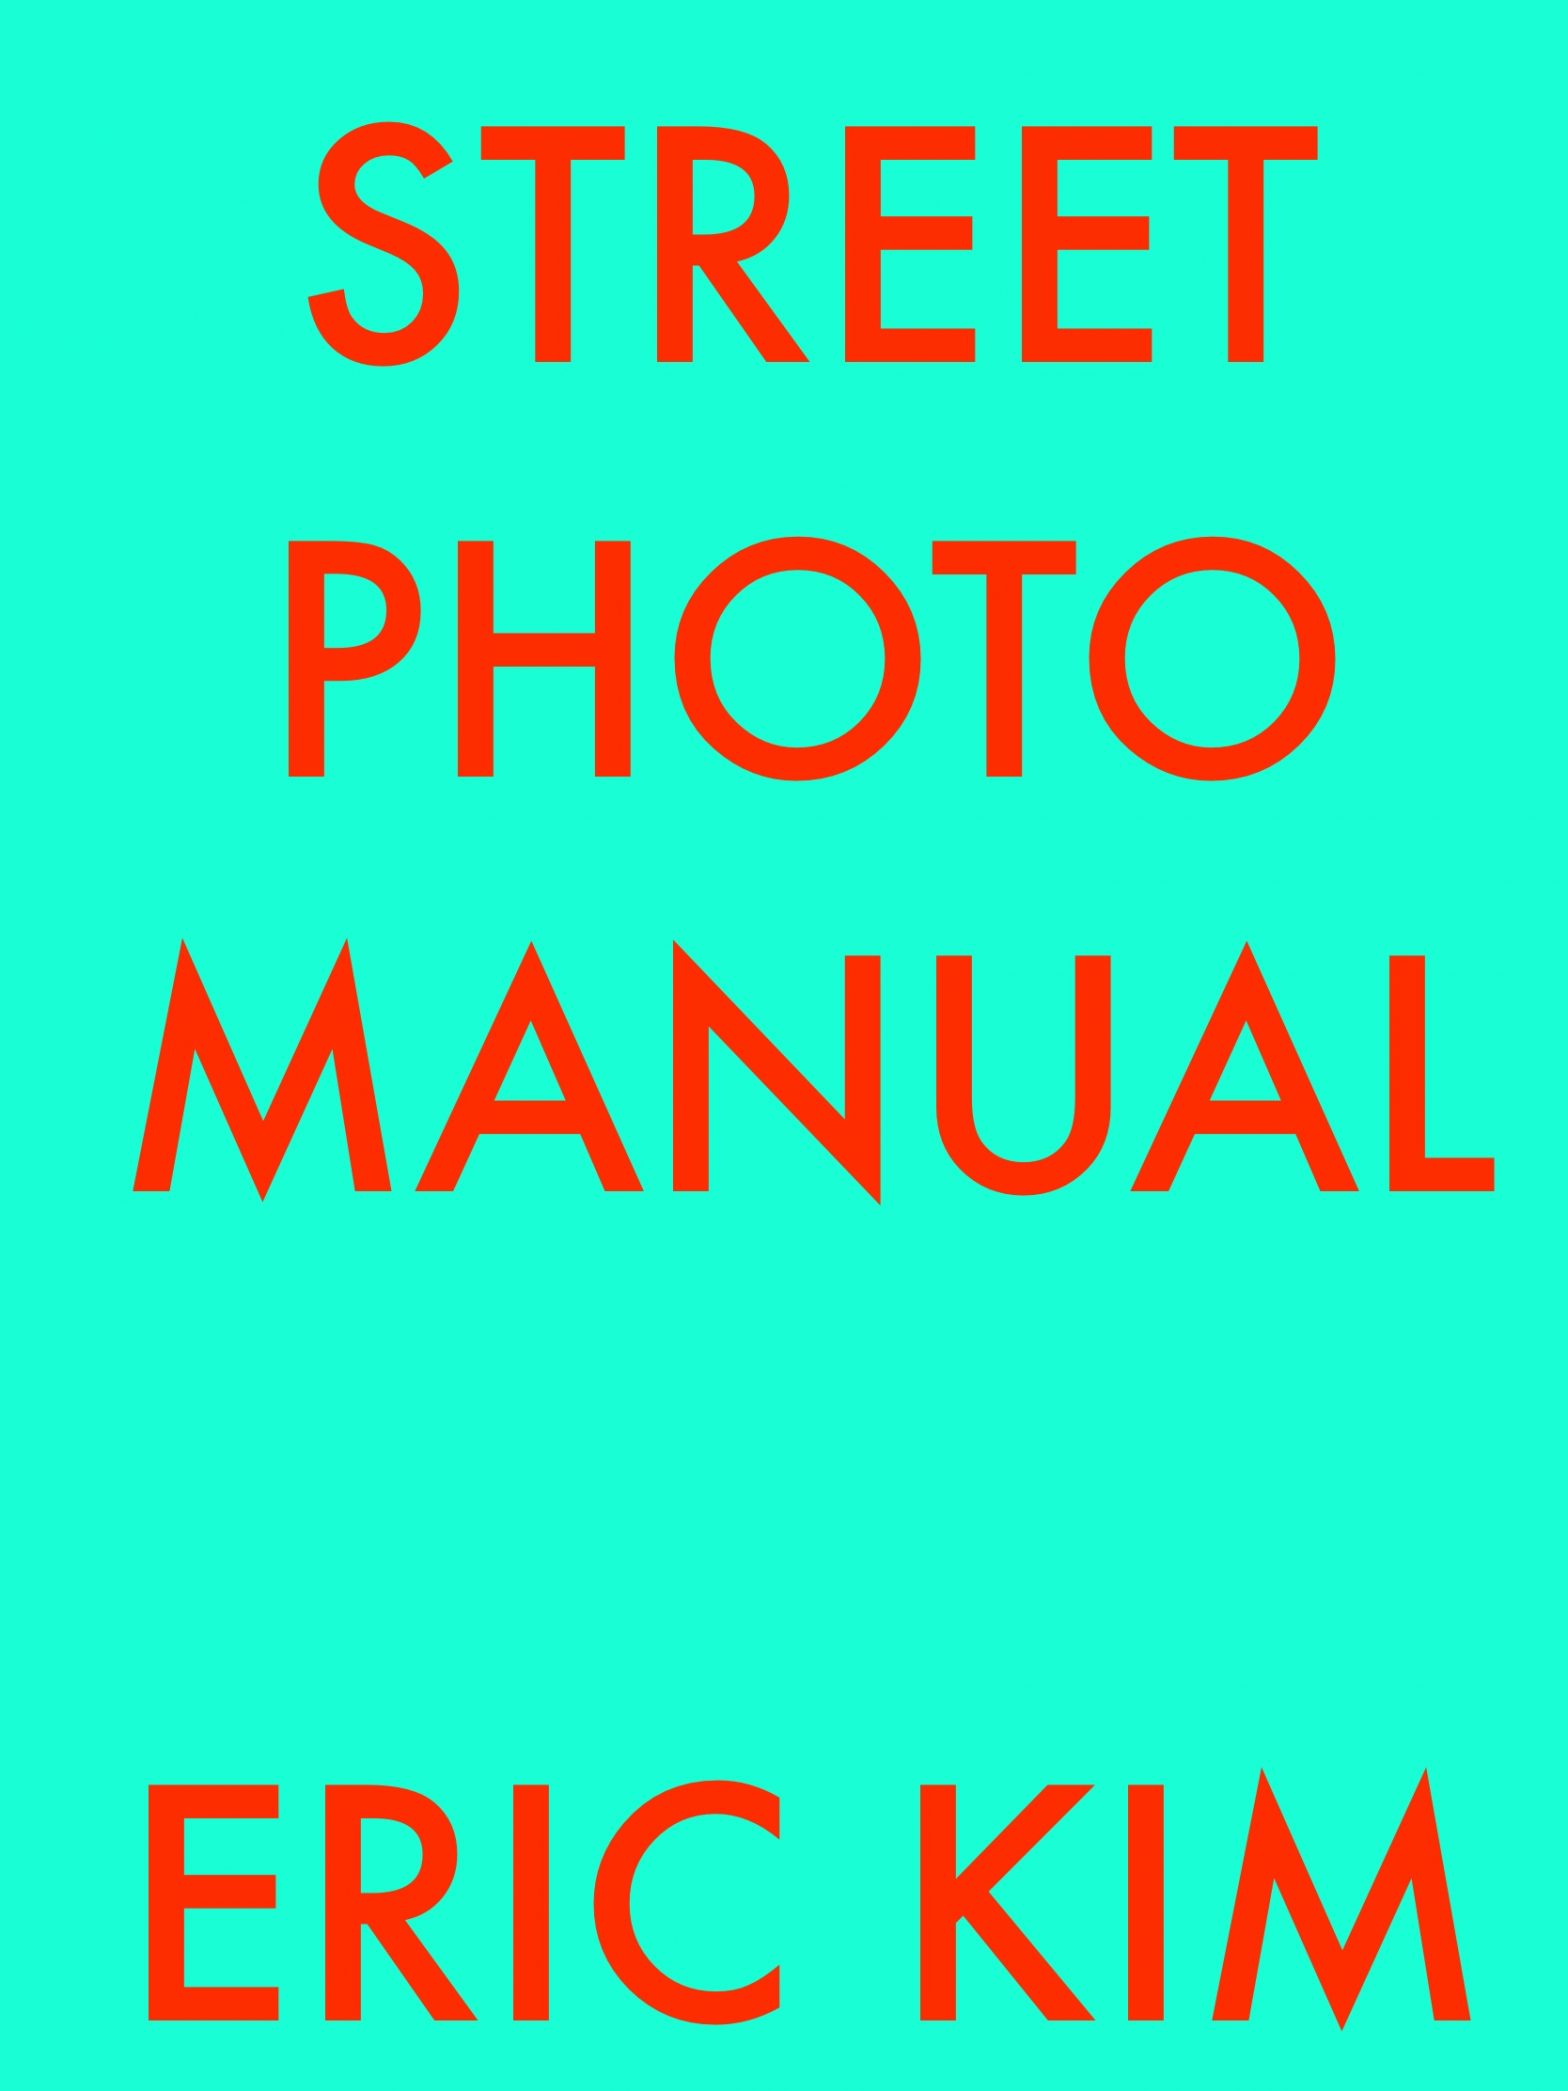 Street photo manual ERIC KIM